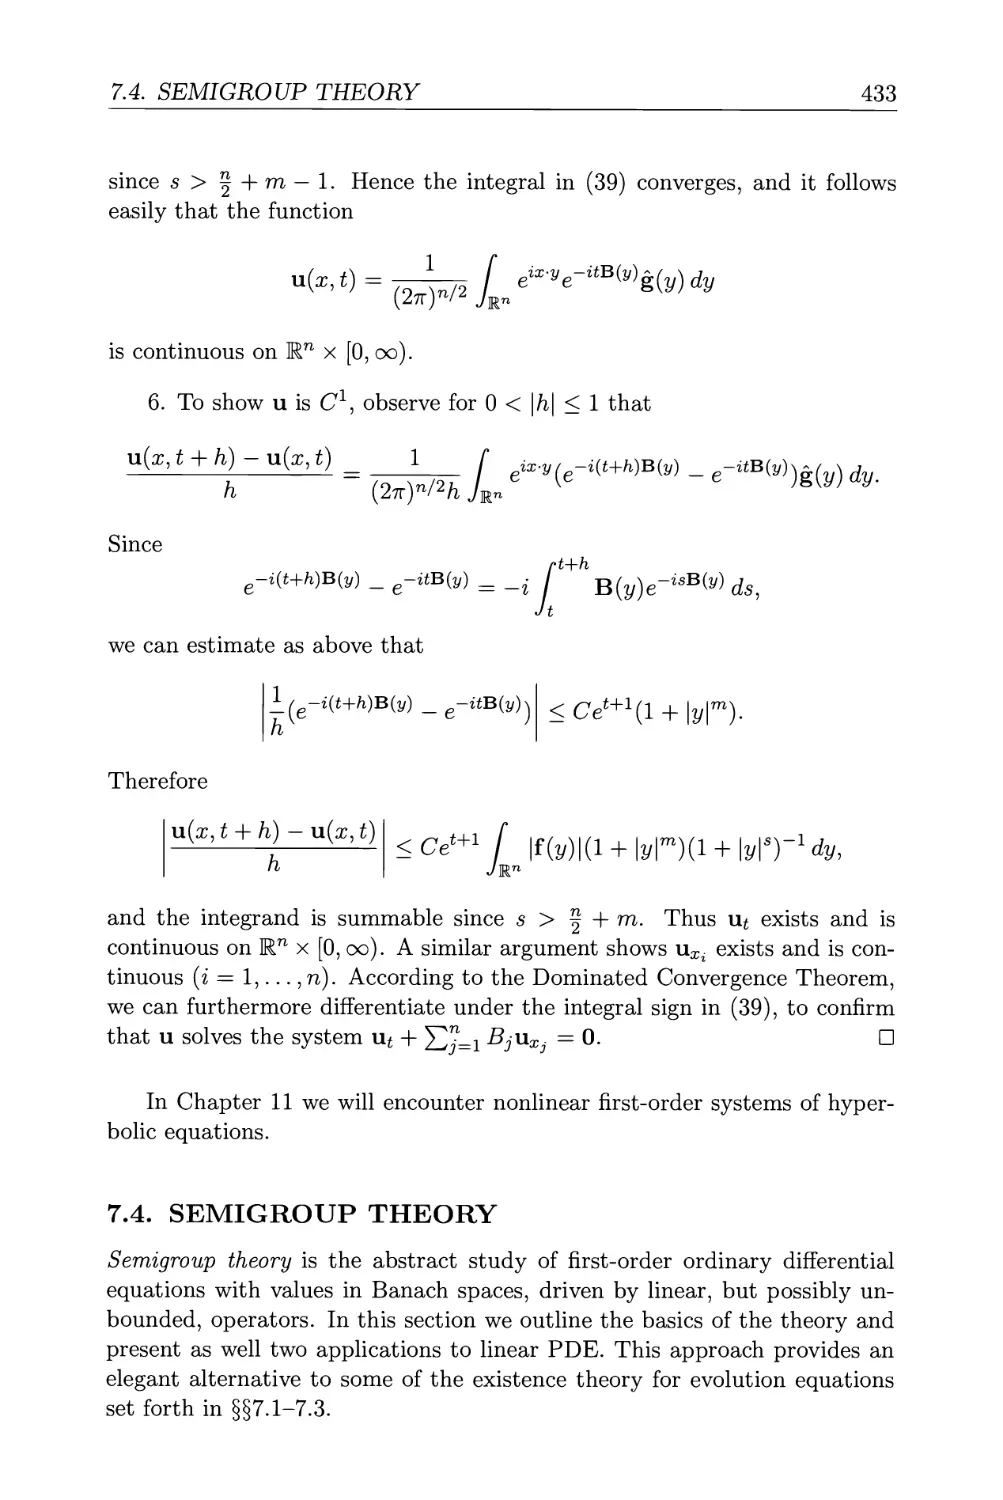 7.4. Semigroup theory